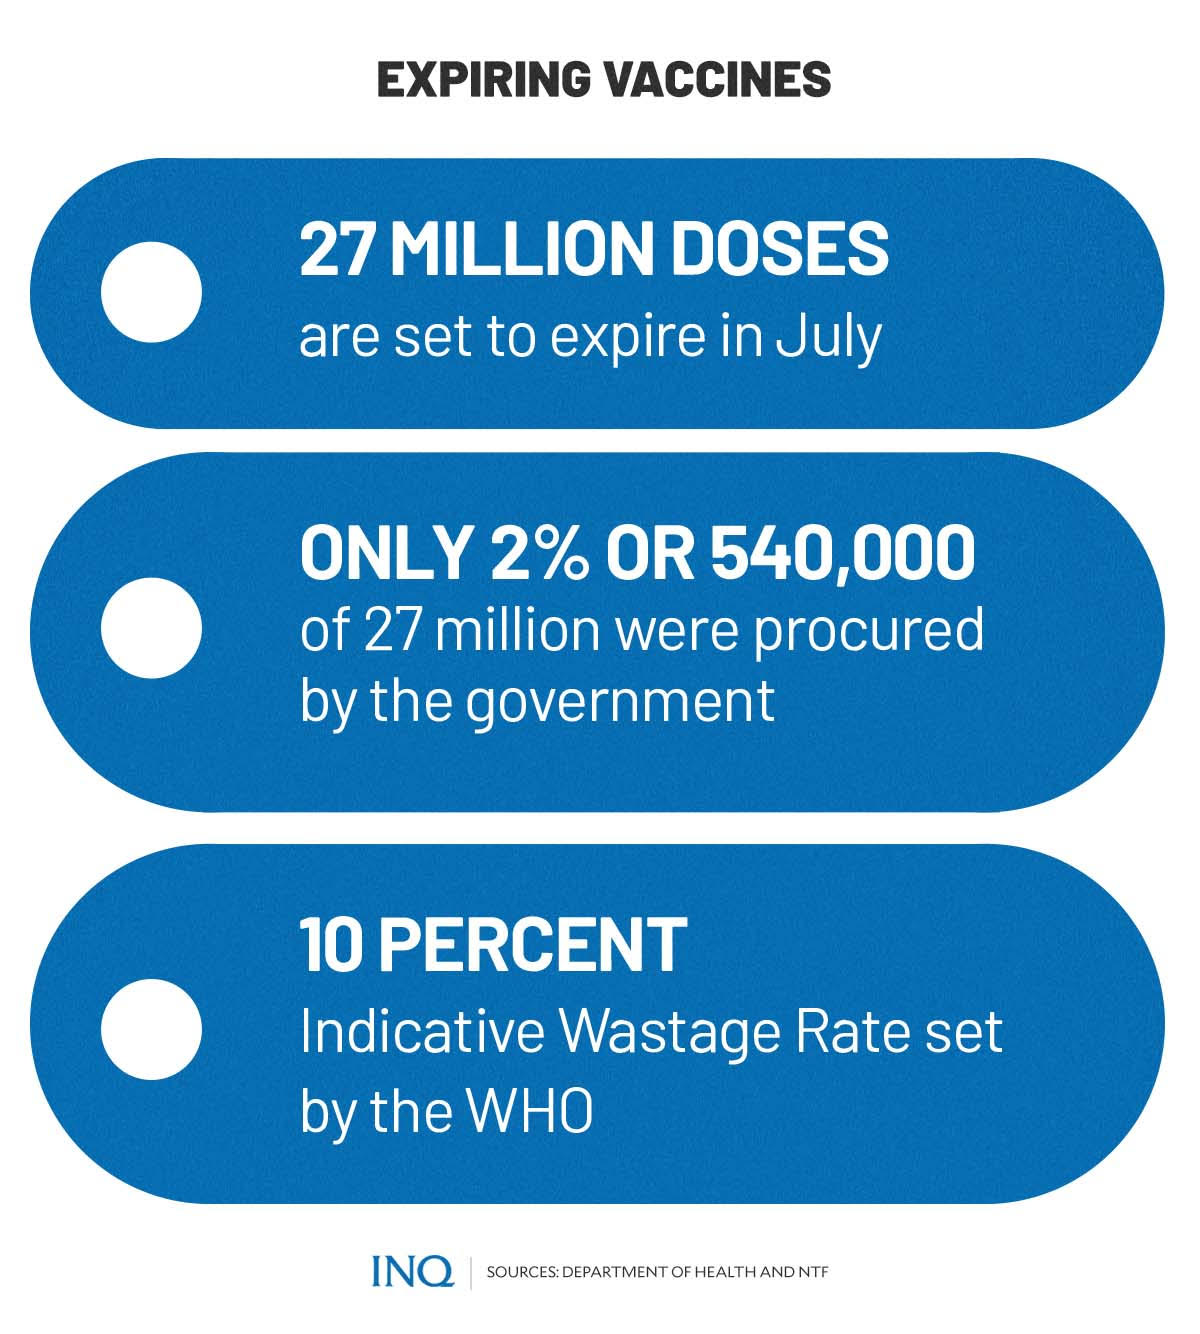 Expiring vaccines